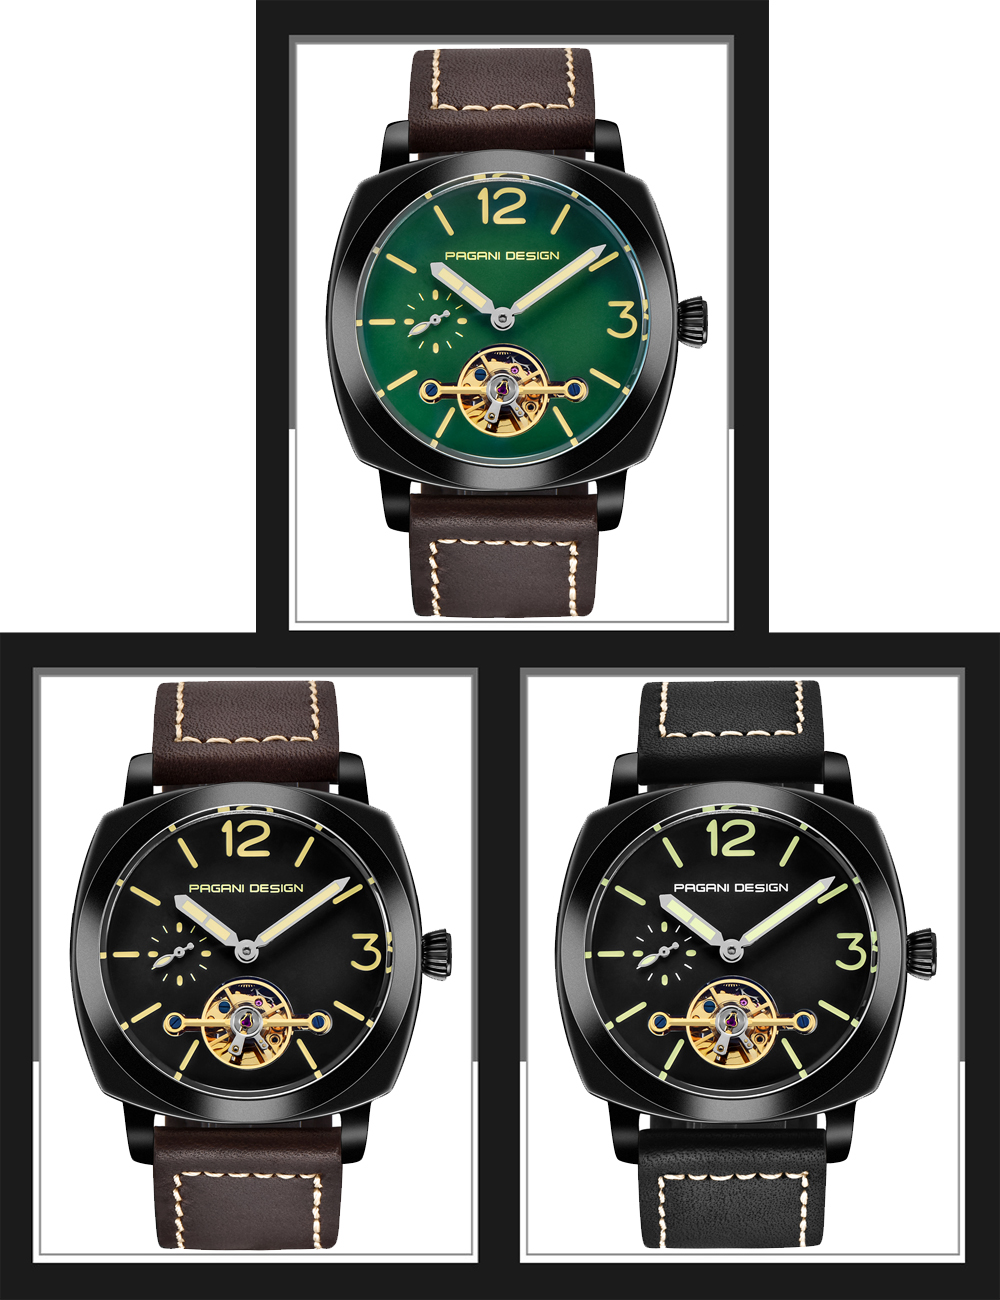 PAGANI DESIGN Top Brand Men's Automatic Mechanical Watches Luminous Leather Fashion Casual Waterproof Watch relogio dropshipping